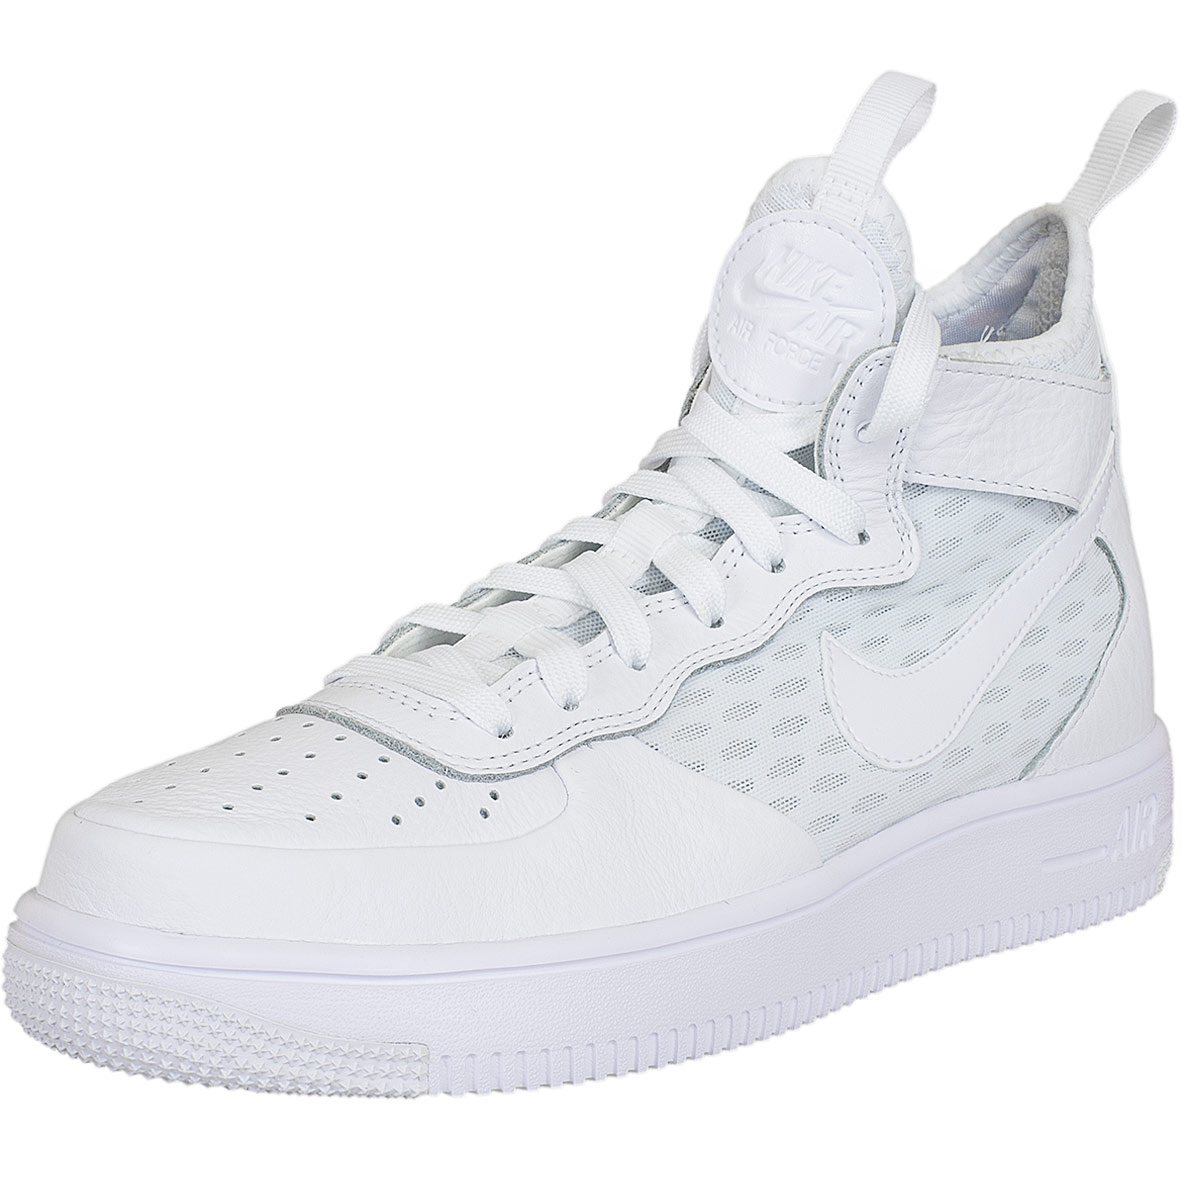 ☆ Nike Damen Sneaker Air Force 1 Ultraforce Mid weiß/weiß - hier bestellen!